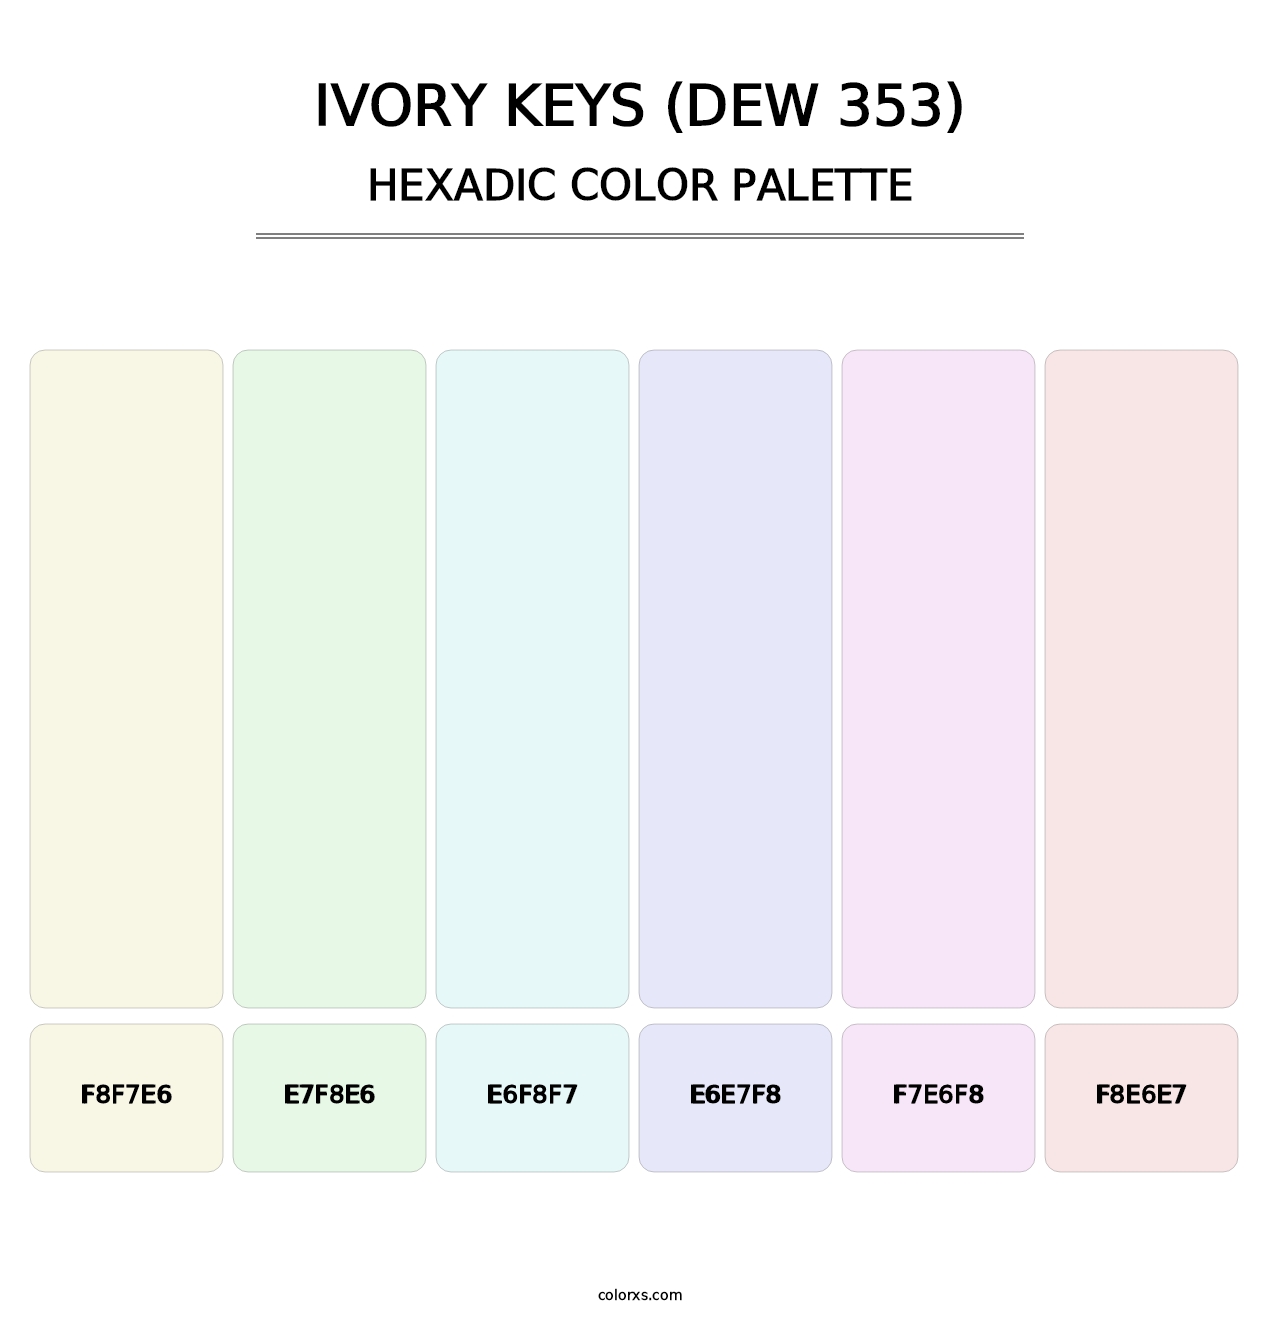 Ivory Keys (DEW 353) - Hexadic Color Palette